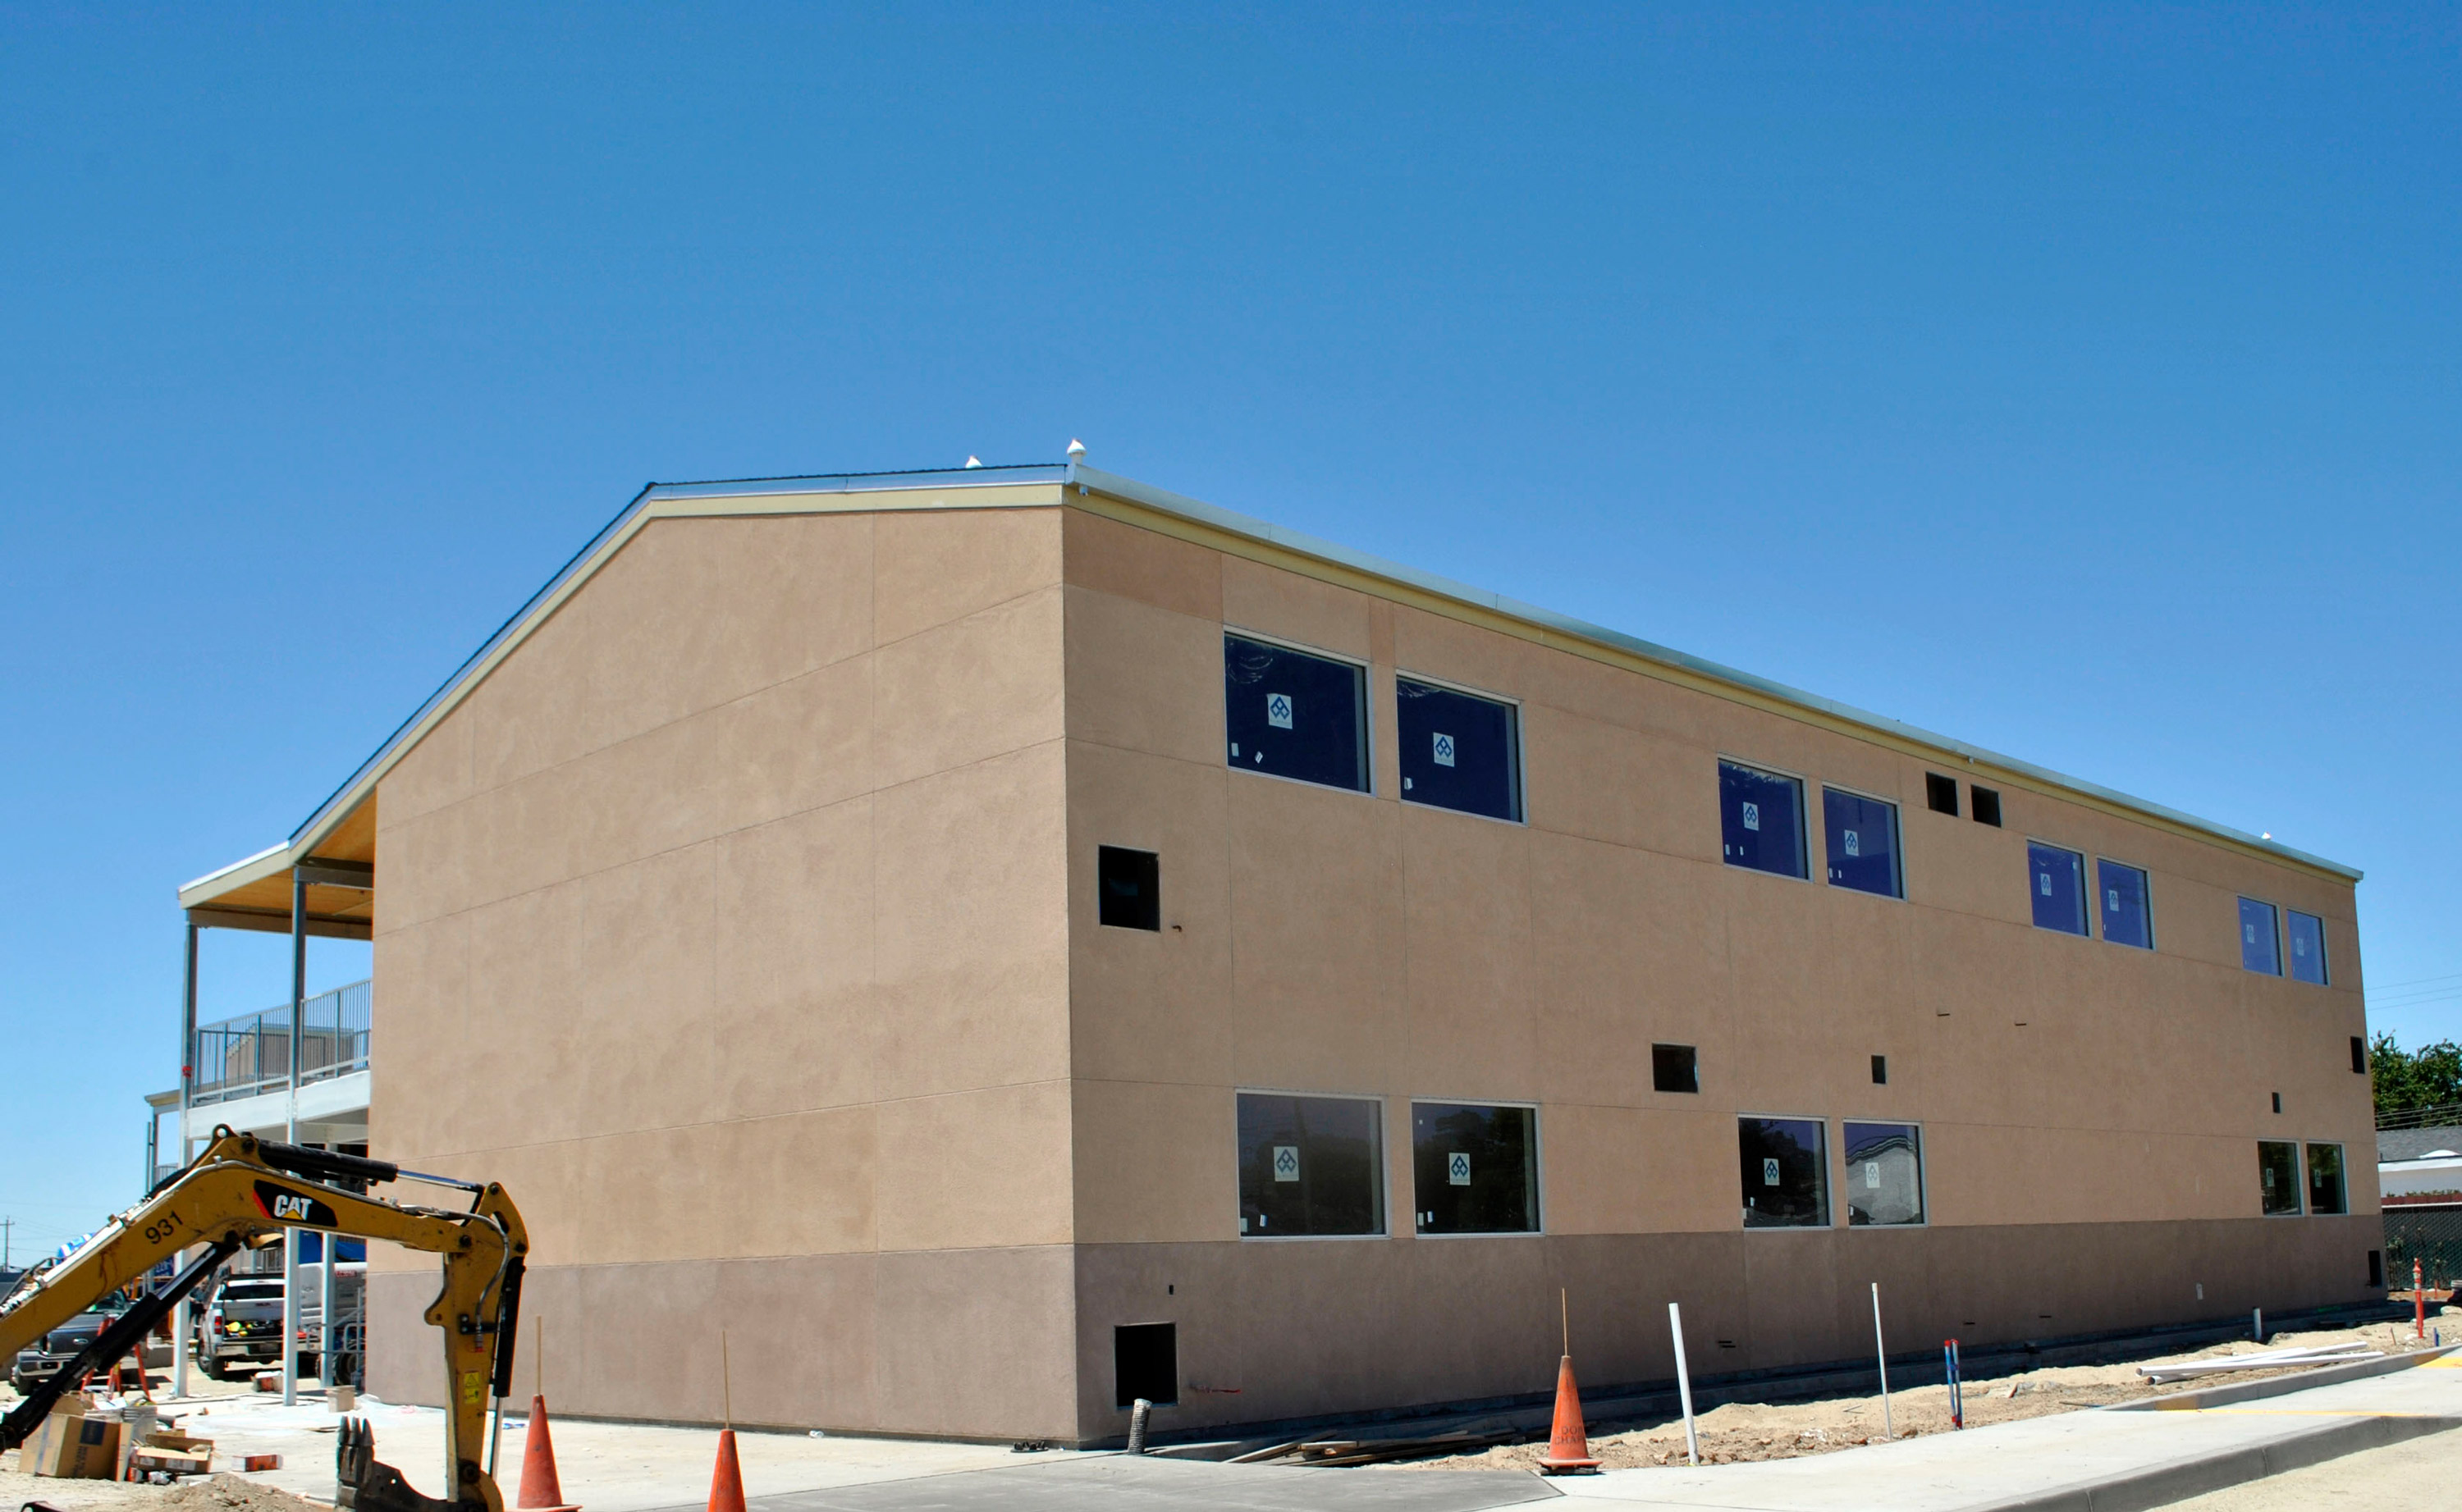 Fremont Elementary School in Salinas, CA - Exterior Under Construction